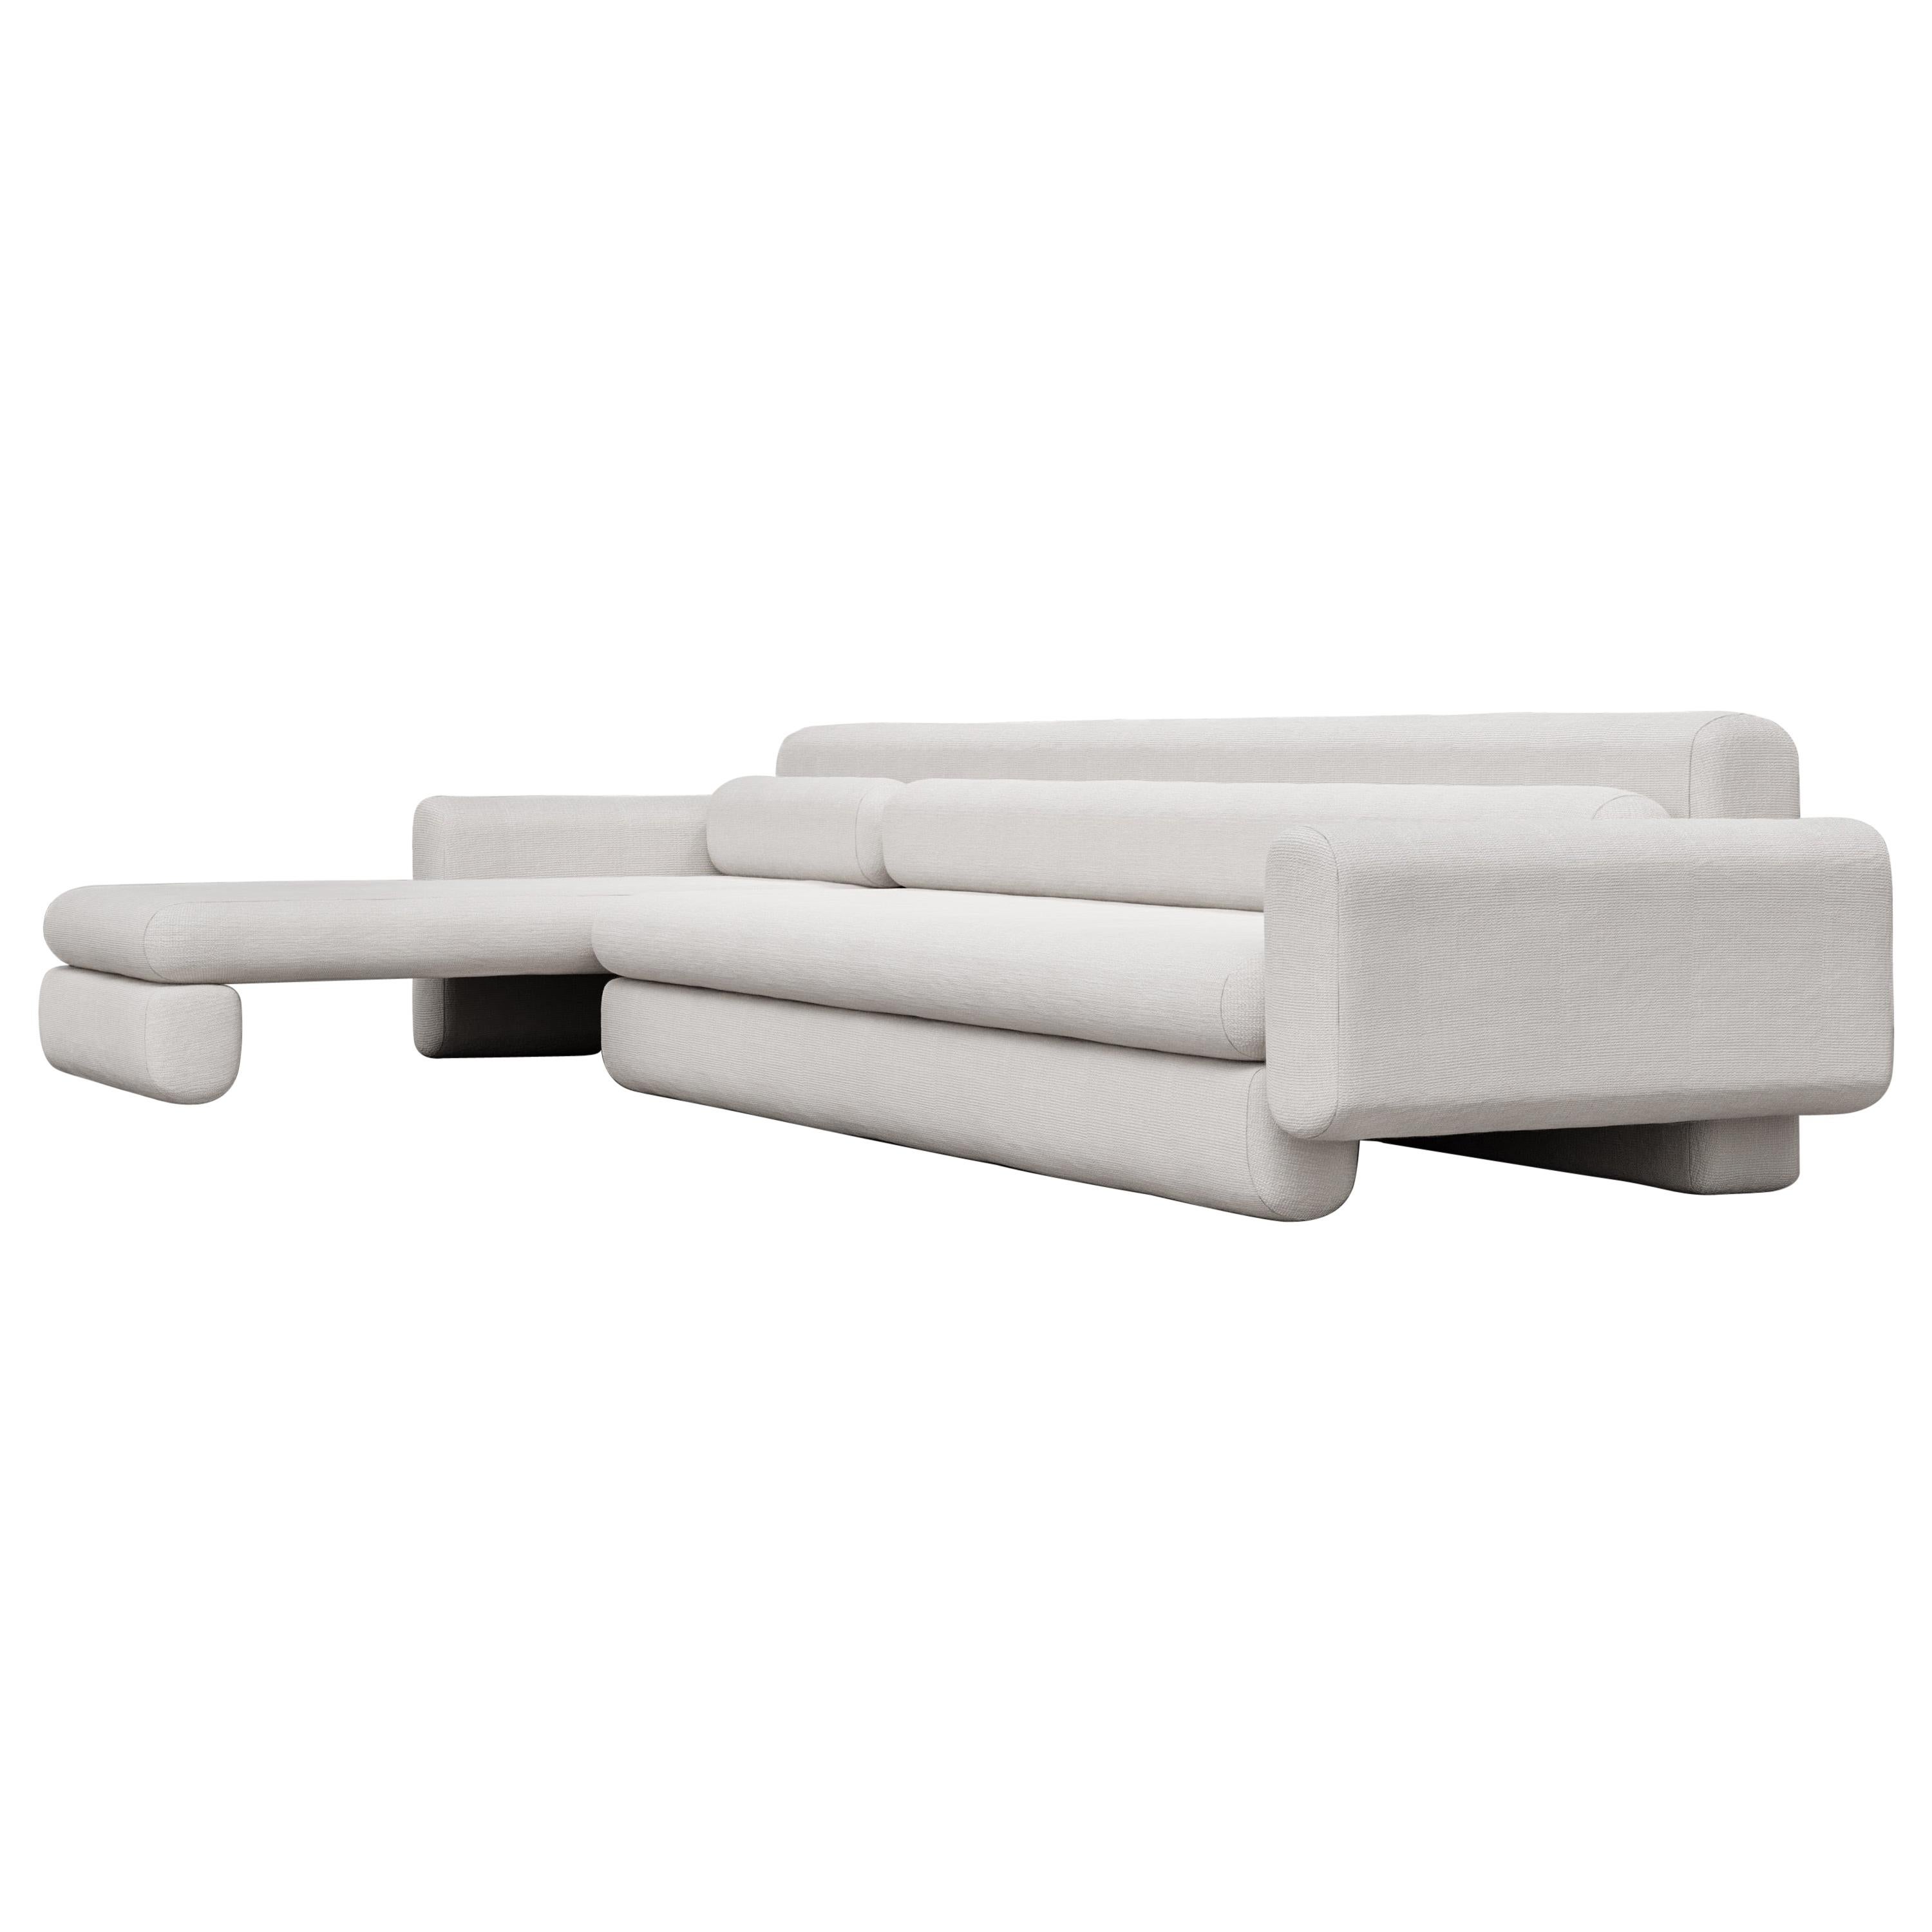 Asym Sectional, Modern Asymmetrical Sectional Sofa in Cream Boucle